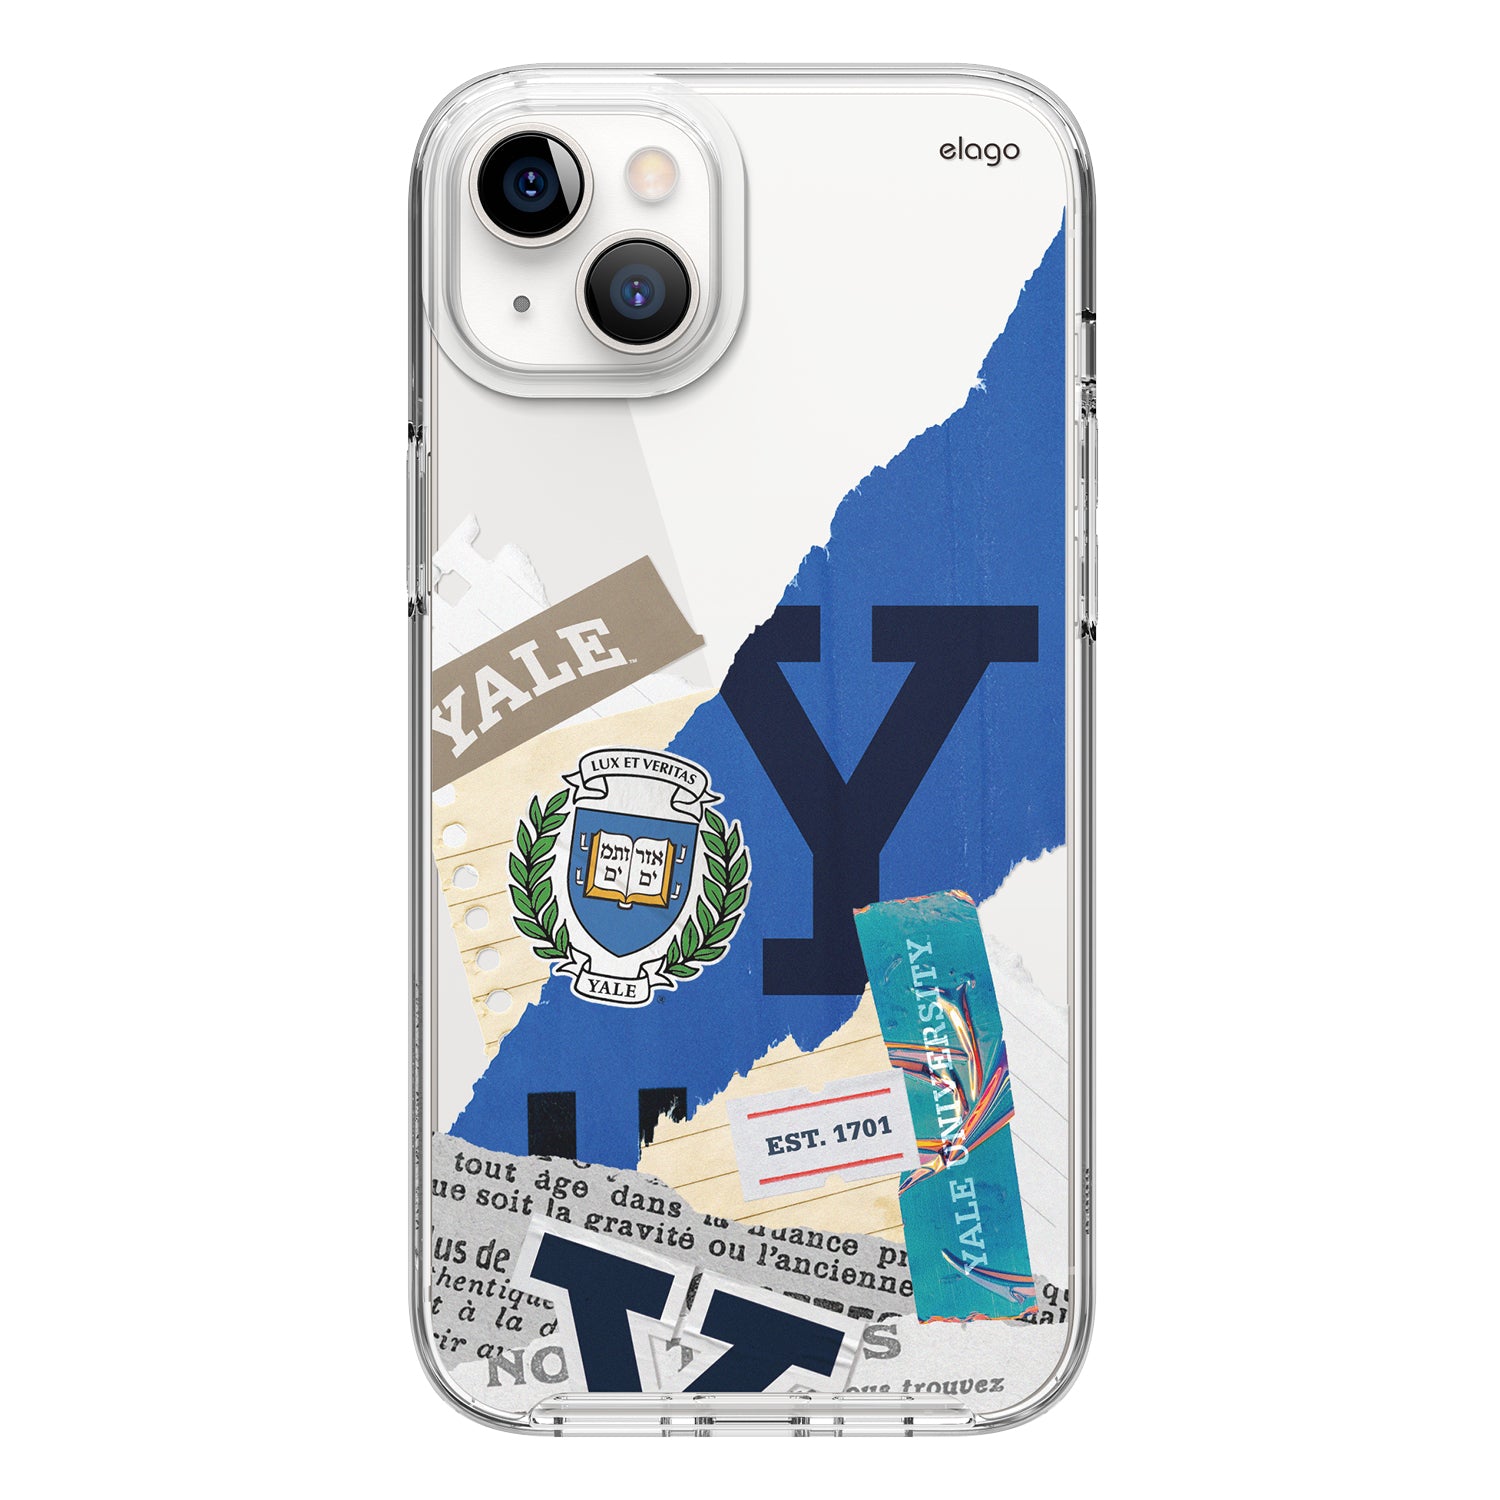 elago X Yale Case for iPhone 14 Plus [2 Styles]